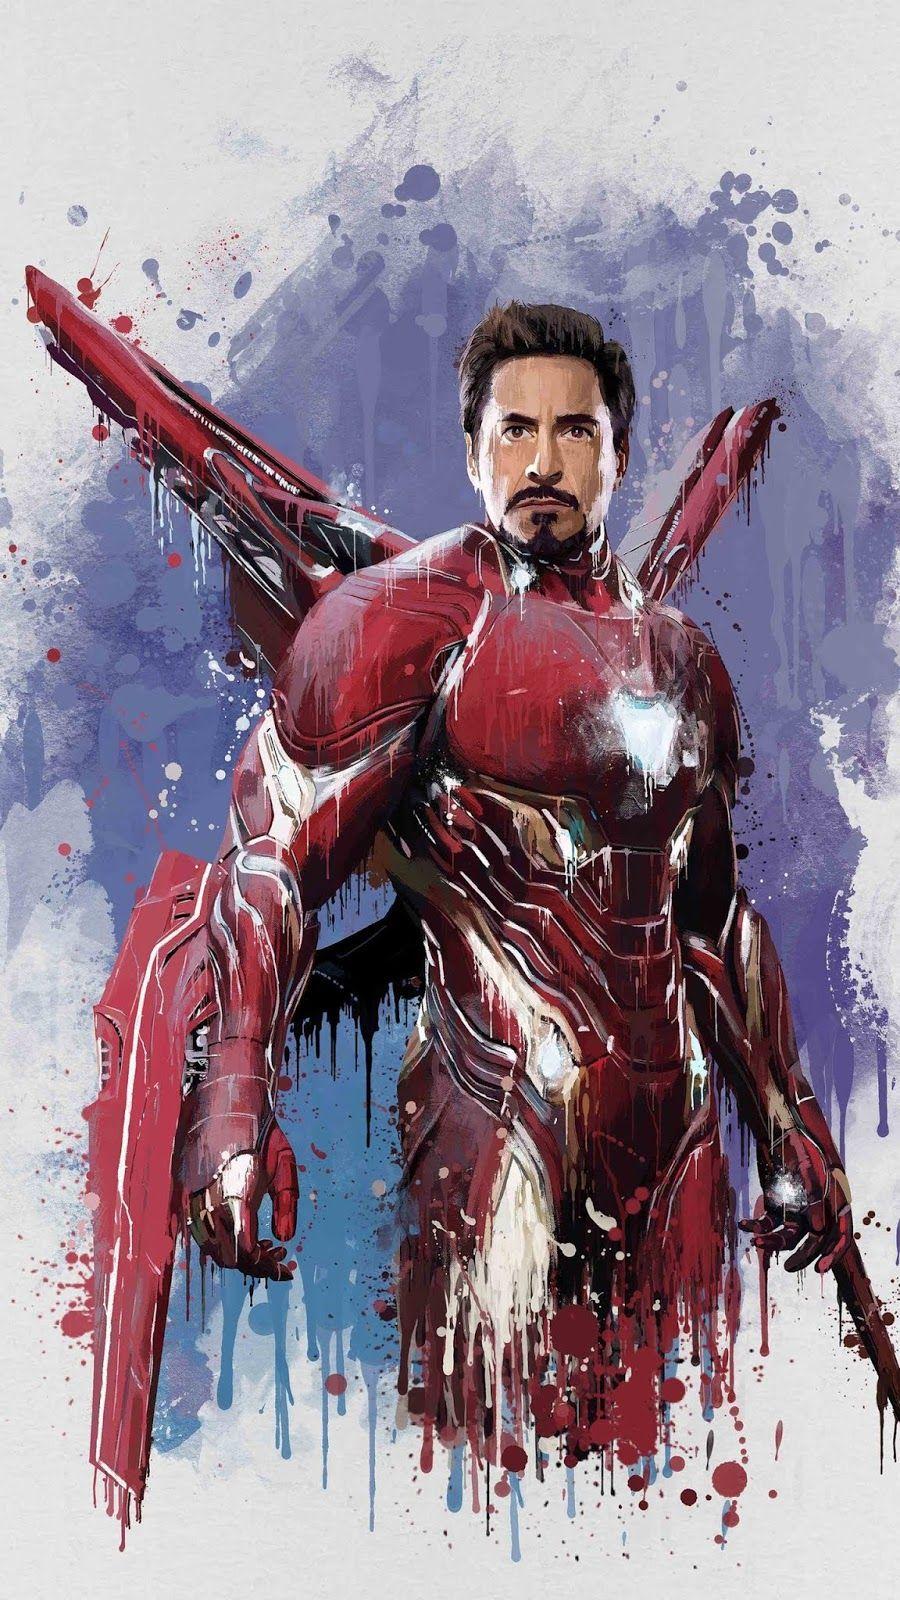 Iron Man HD Wallpaper From Infinity War Download In 4K